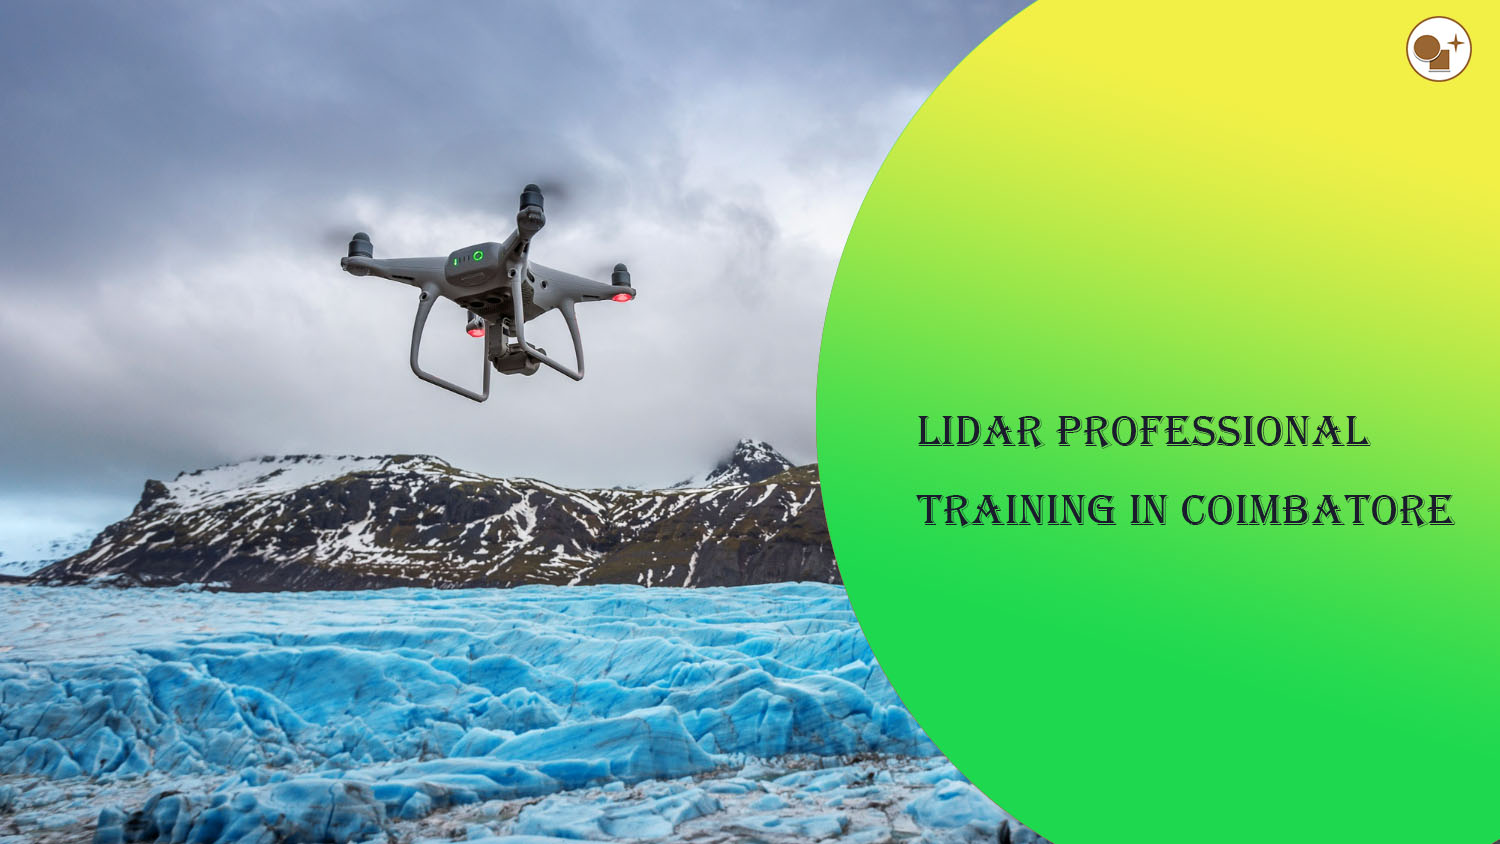 Lidar professional training in Coimbatore